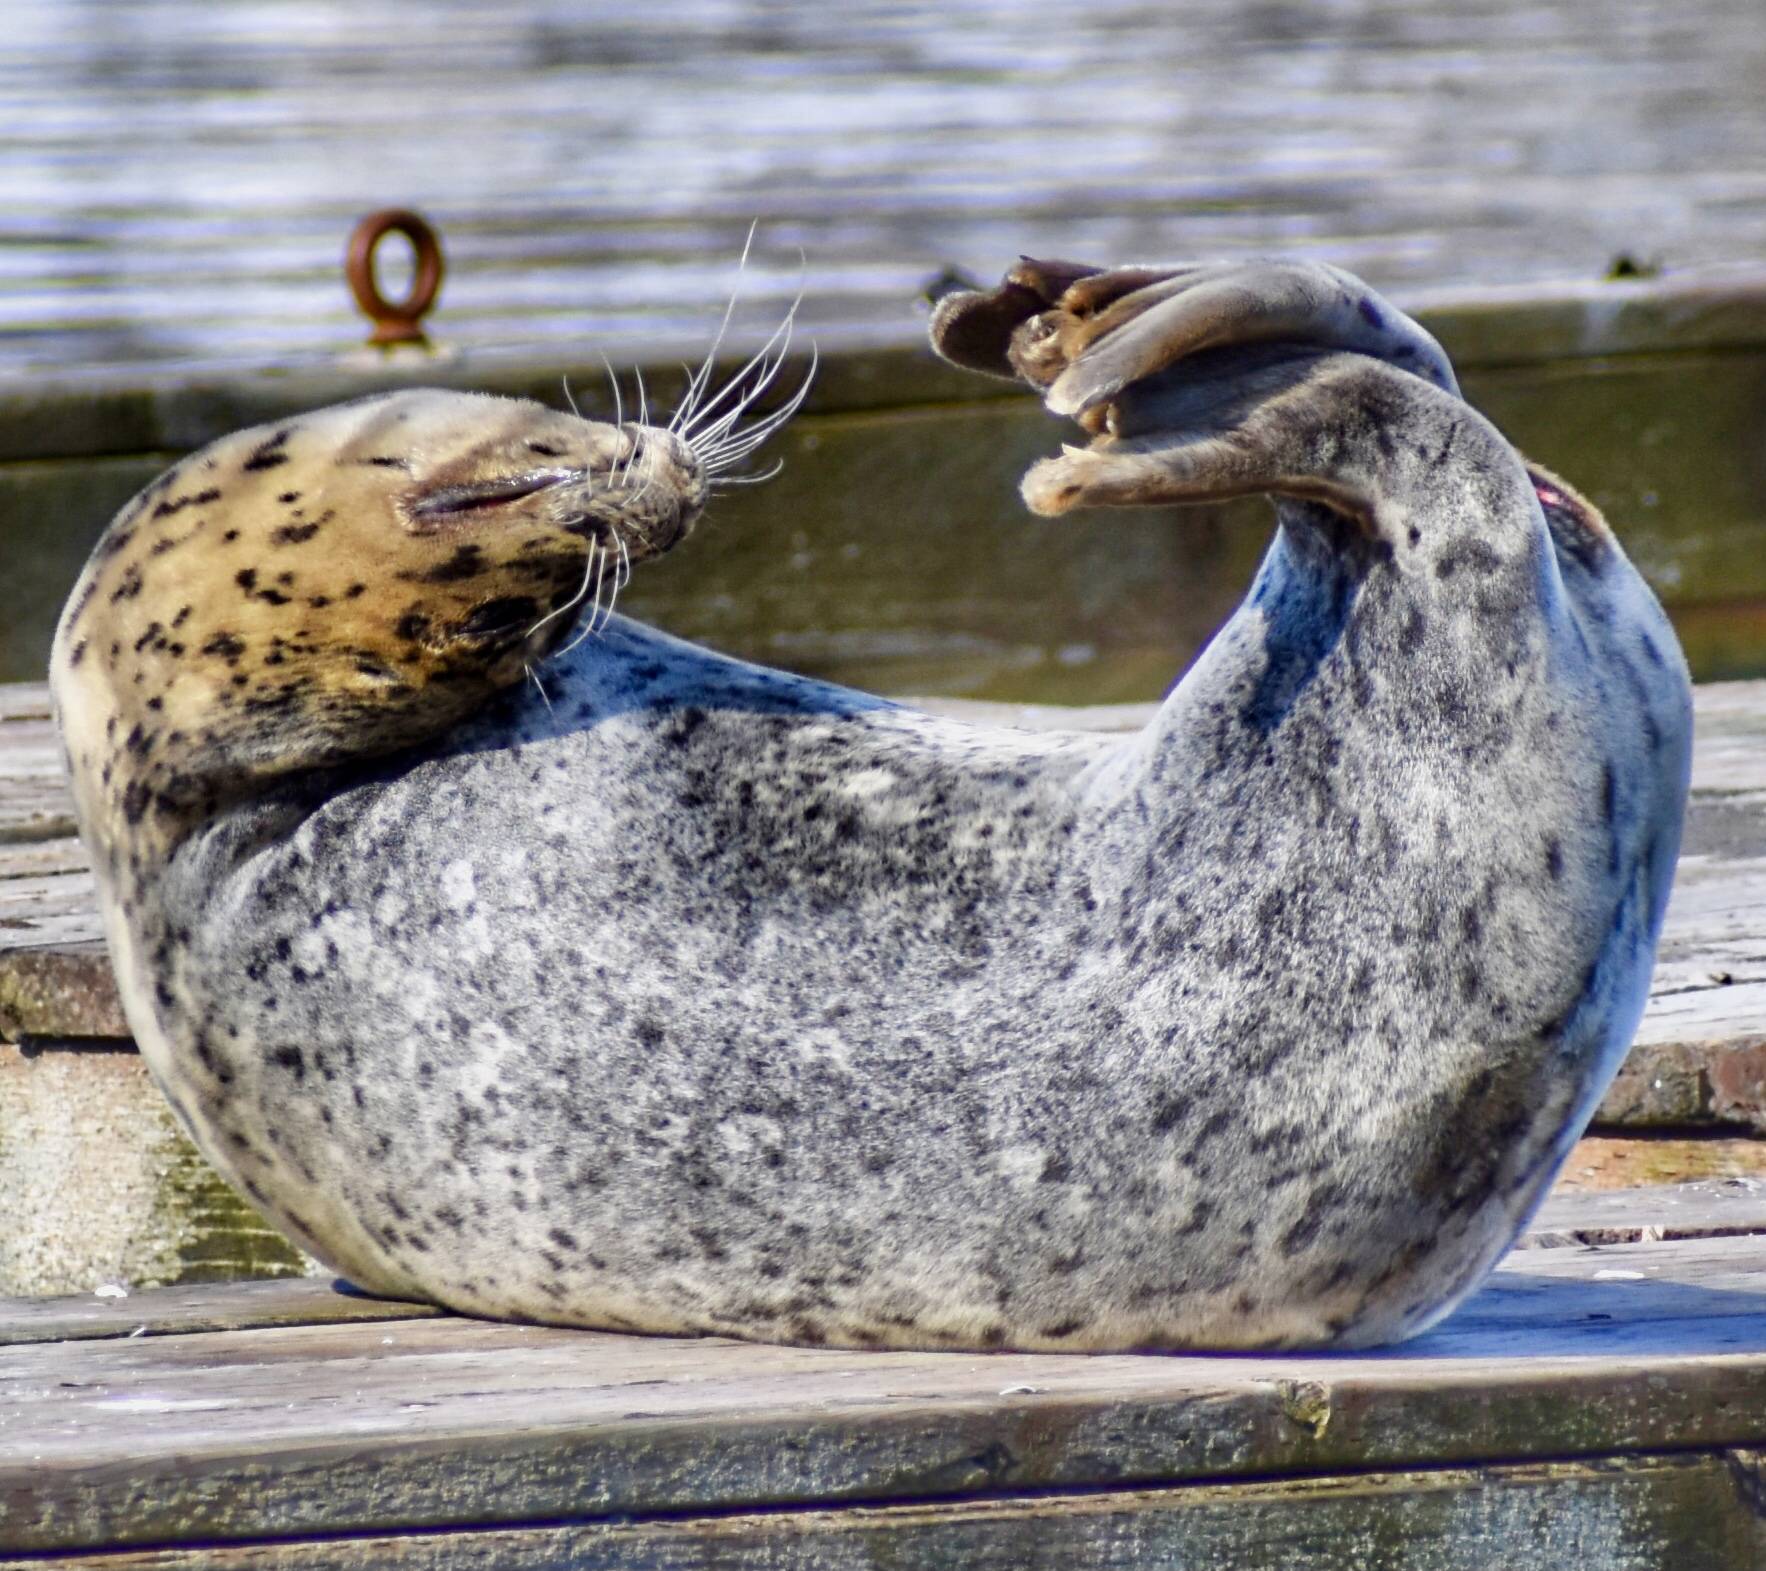 A seal contorts into a yoga-like pose. (Courtesy Photo / Virginia Kelly)